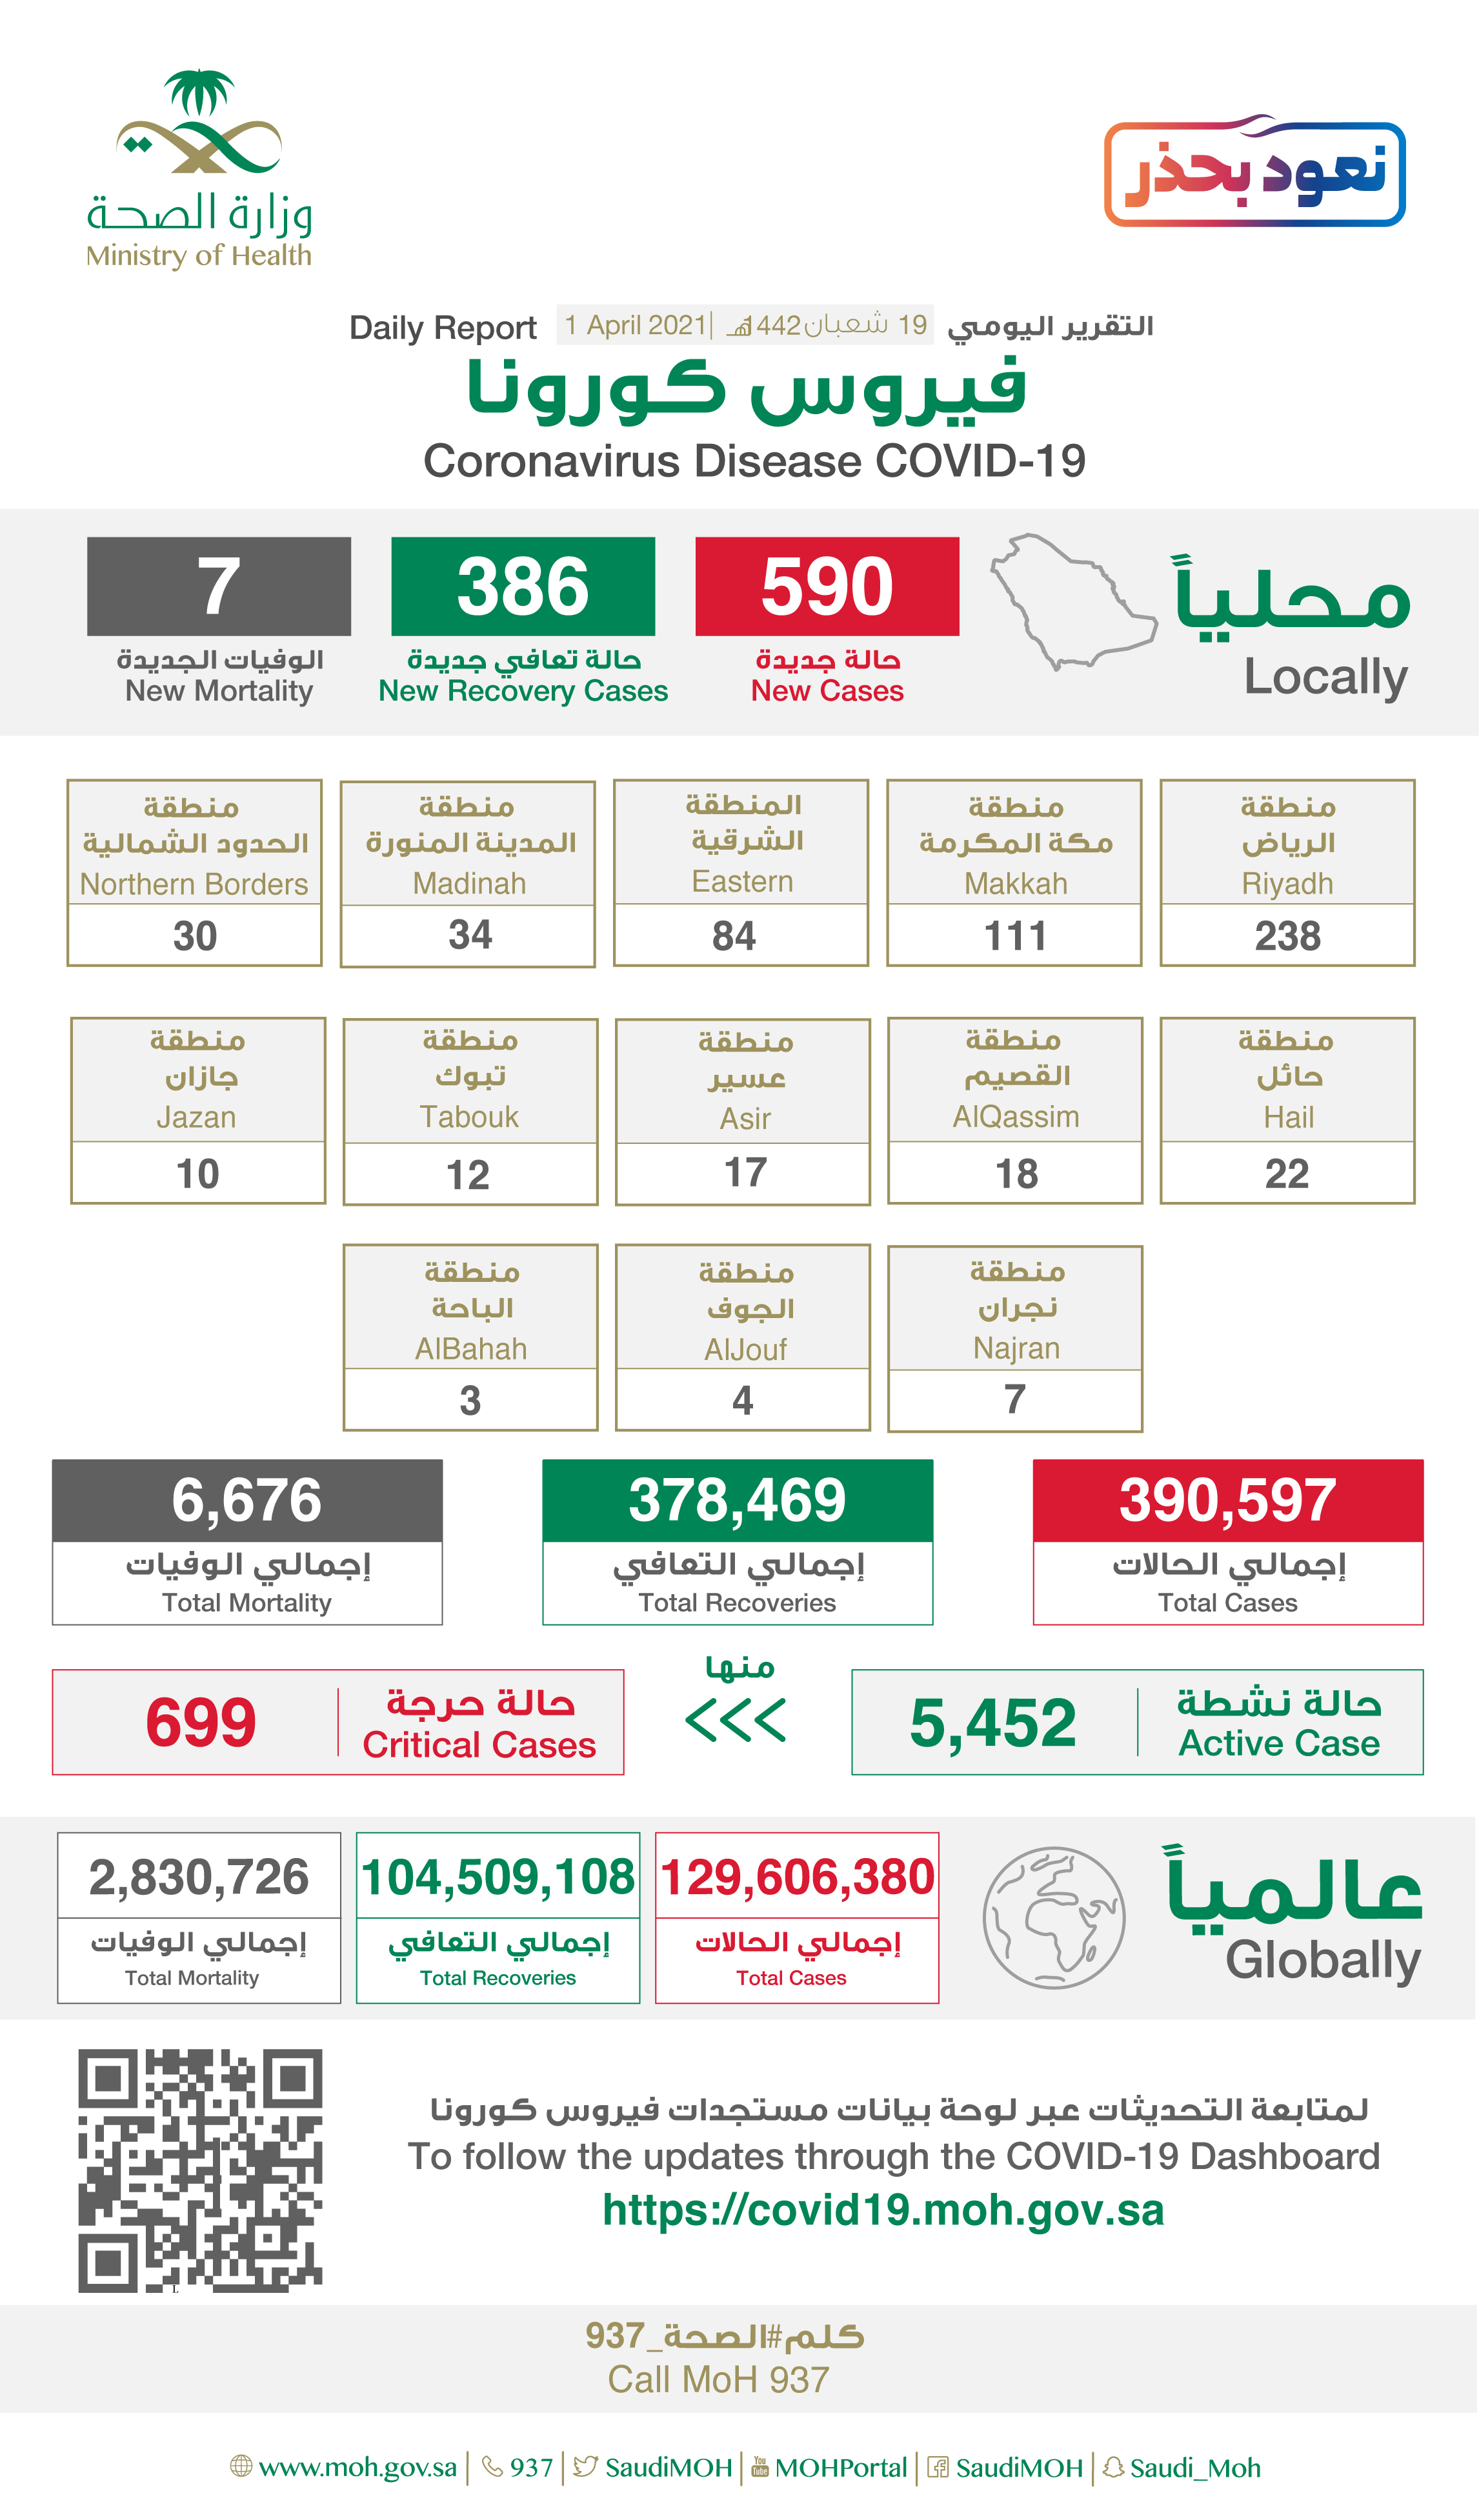 Saudi Arabia Coronavirus : Total Cases :390,597 , New Cases : 590, Cured : 378,469 , Deaths: 6,676, Active Cases : 5,452